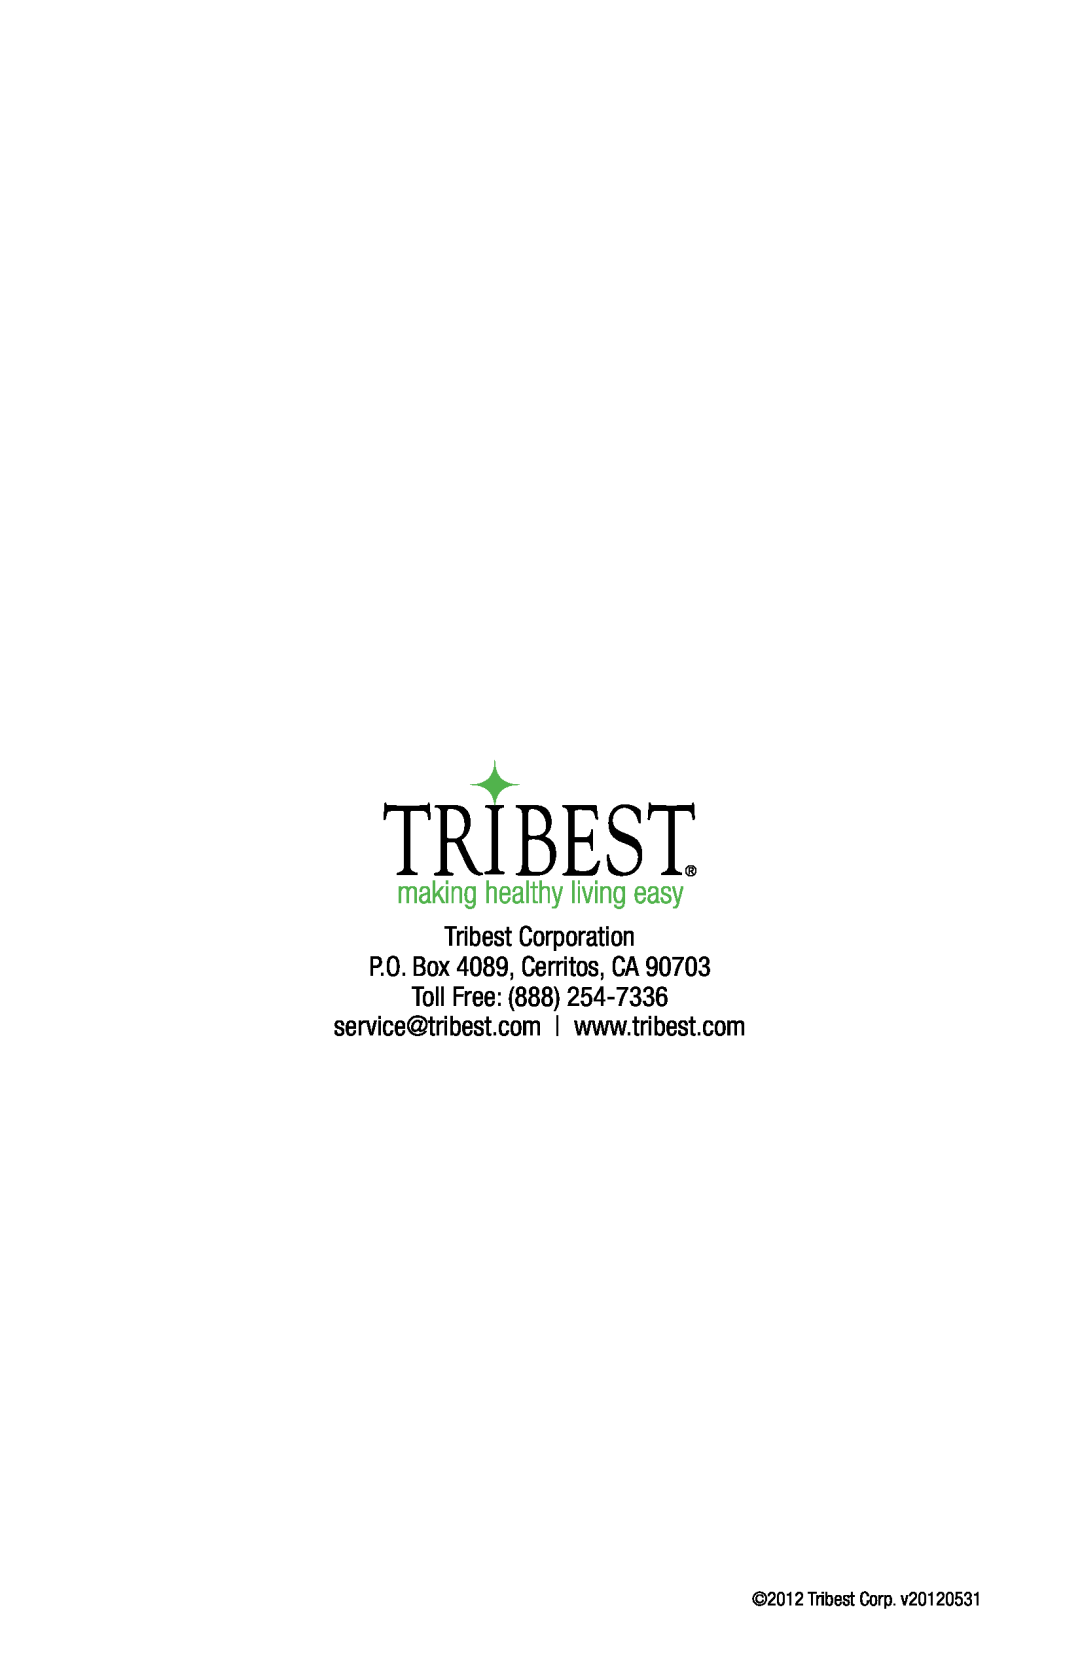 Tribest Z-610 instruction manual Tribest Corporation P.O. Box 4089, Cerritos, CA, Toll Free 